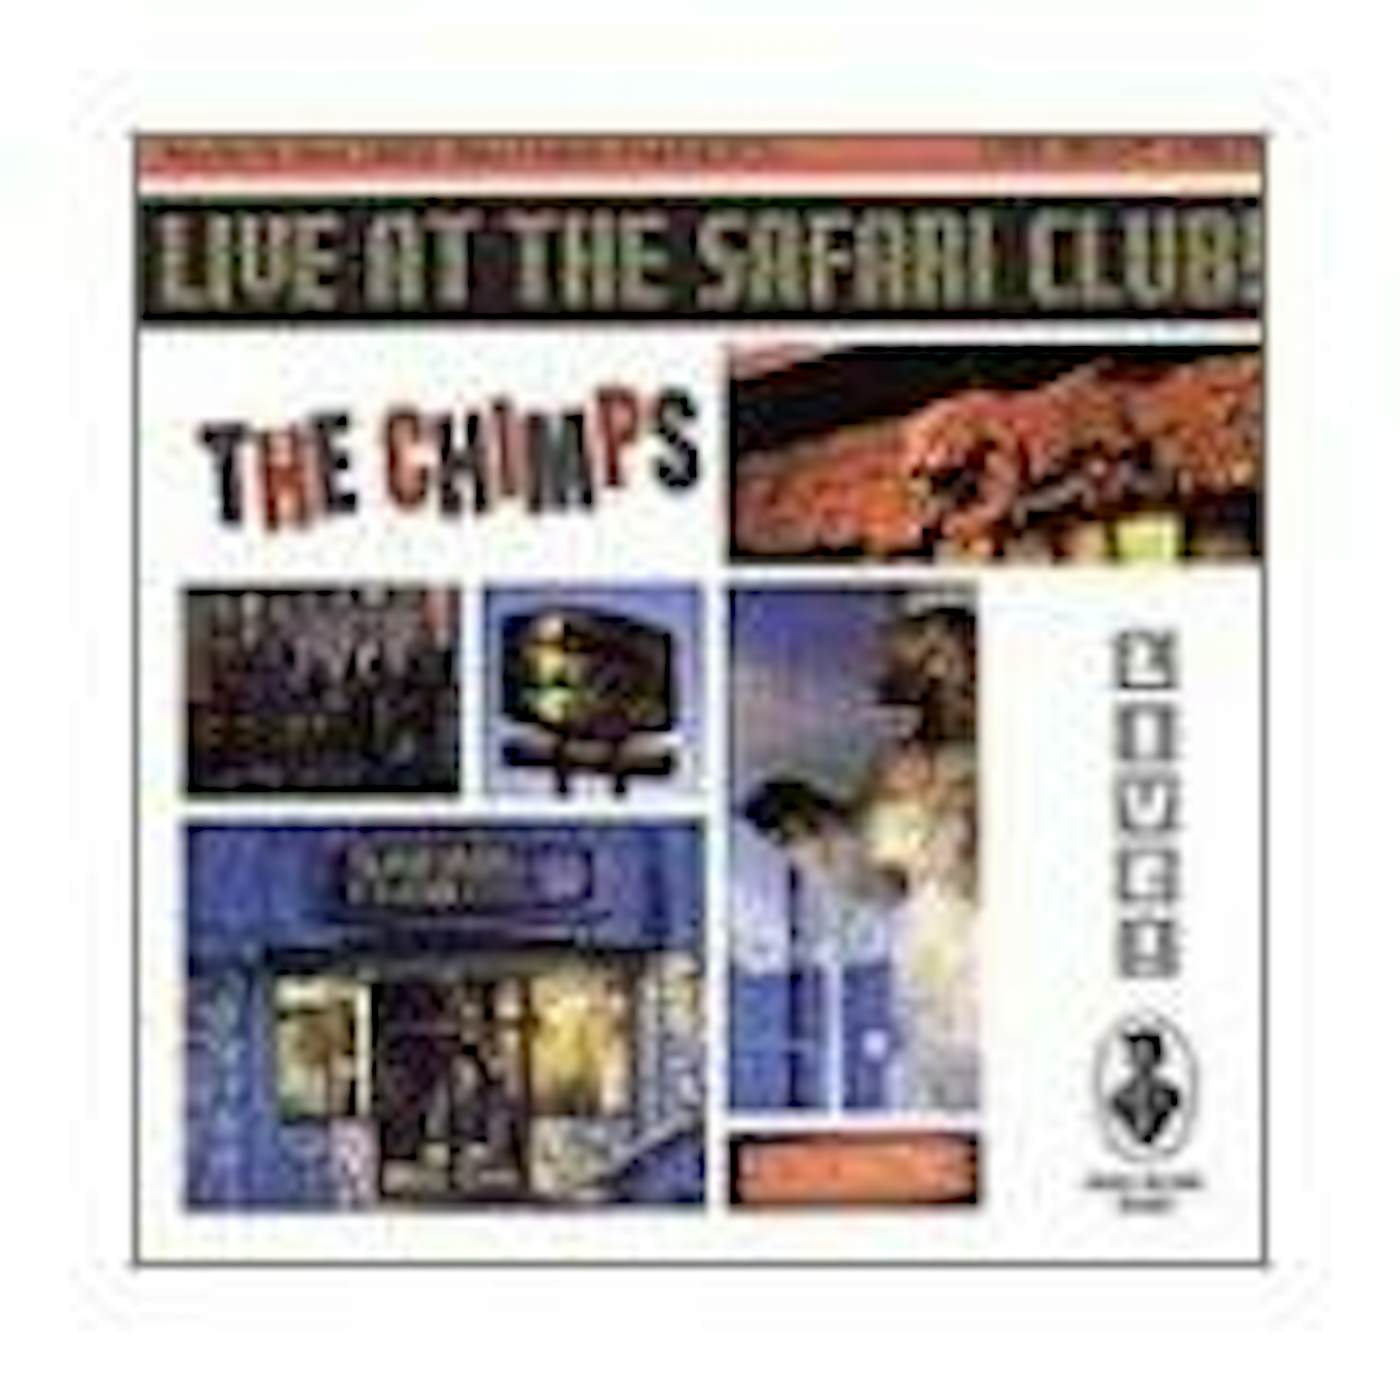 The Chimps LIVE AT THE SAFARI CLUB CD